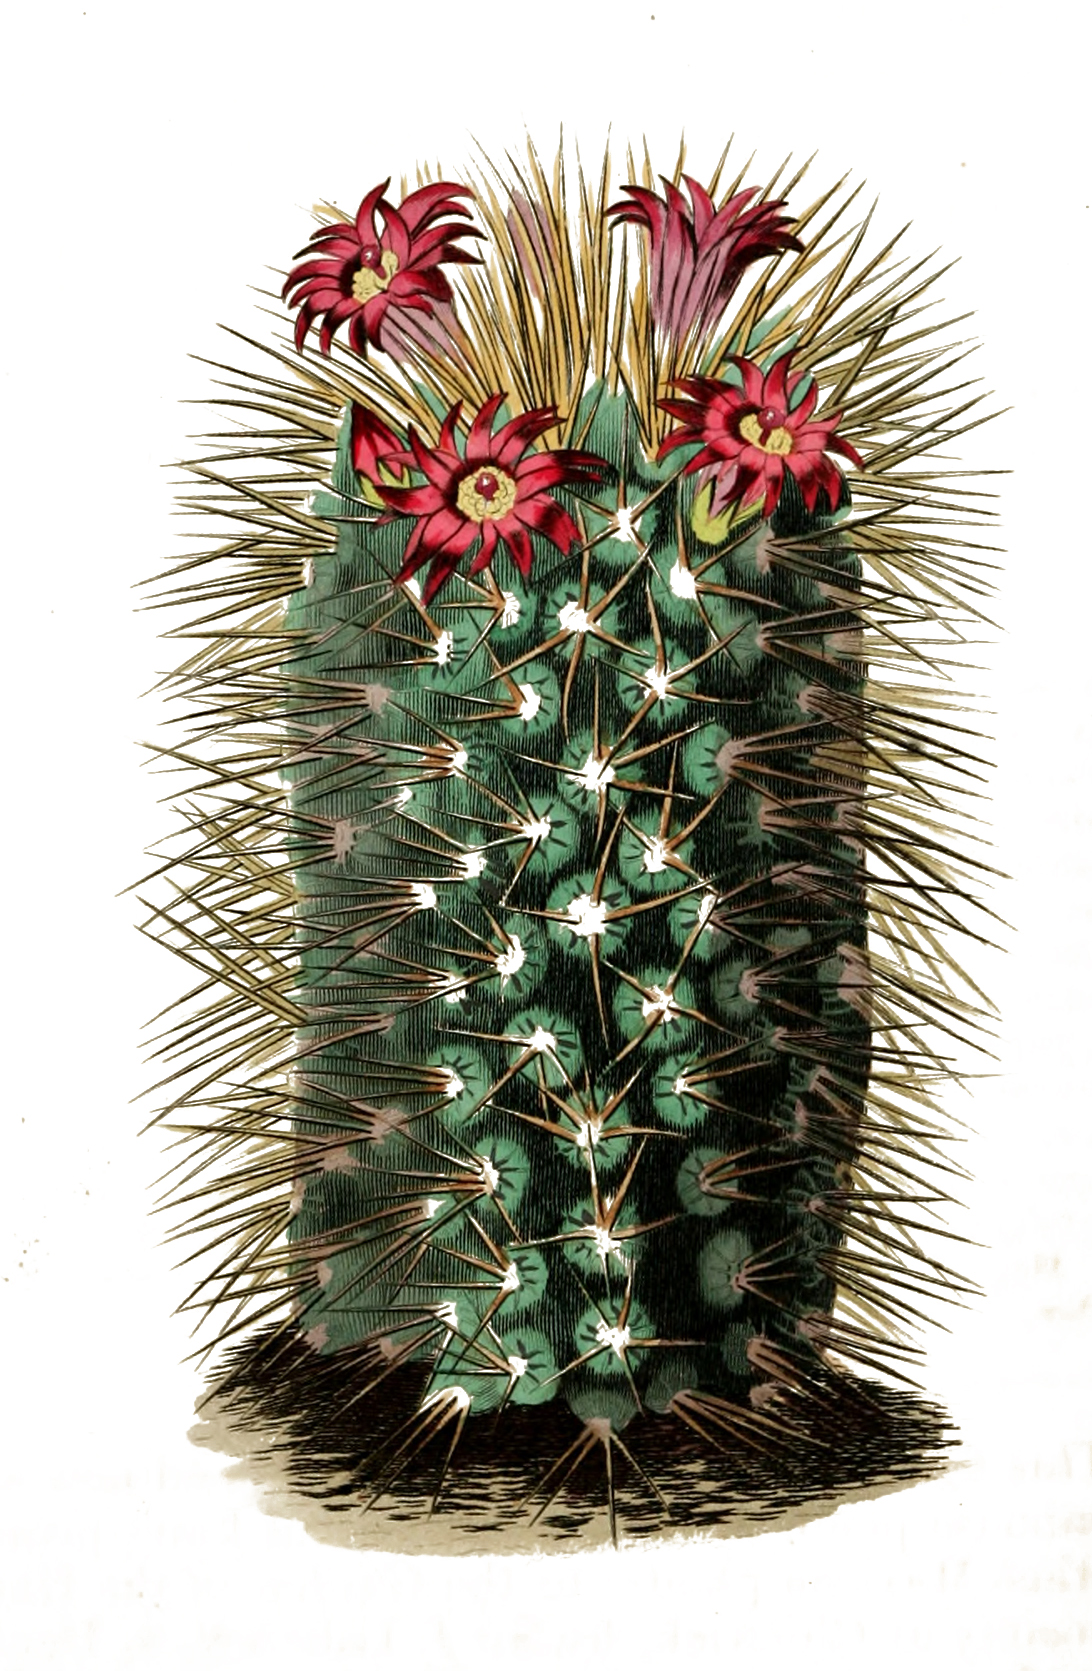 http://www.grafficalmuse.com/wp-content/uploads/2015/06/Vintage_Botanical_Print_Cactus.jpg